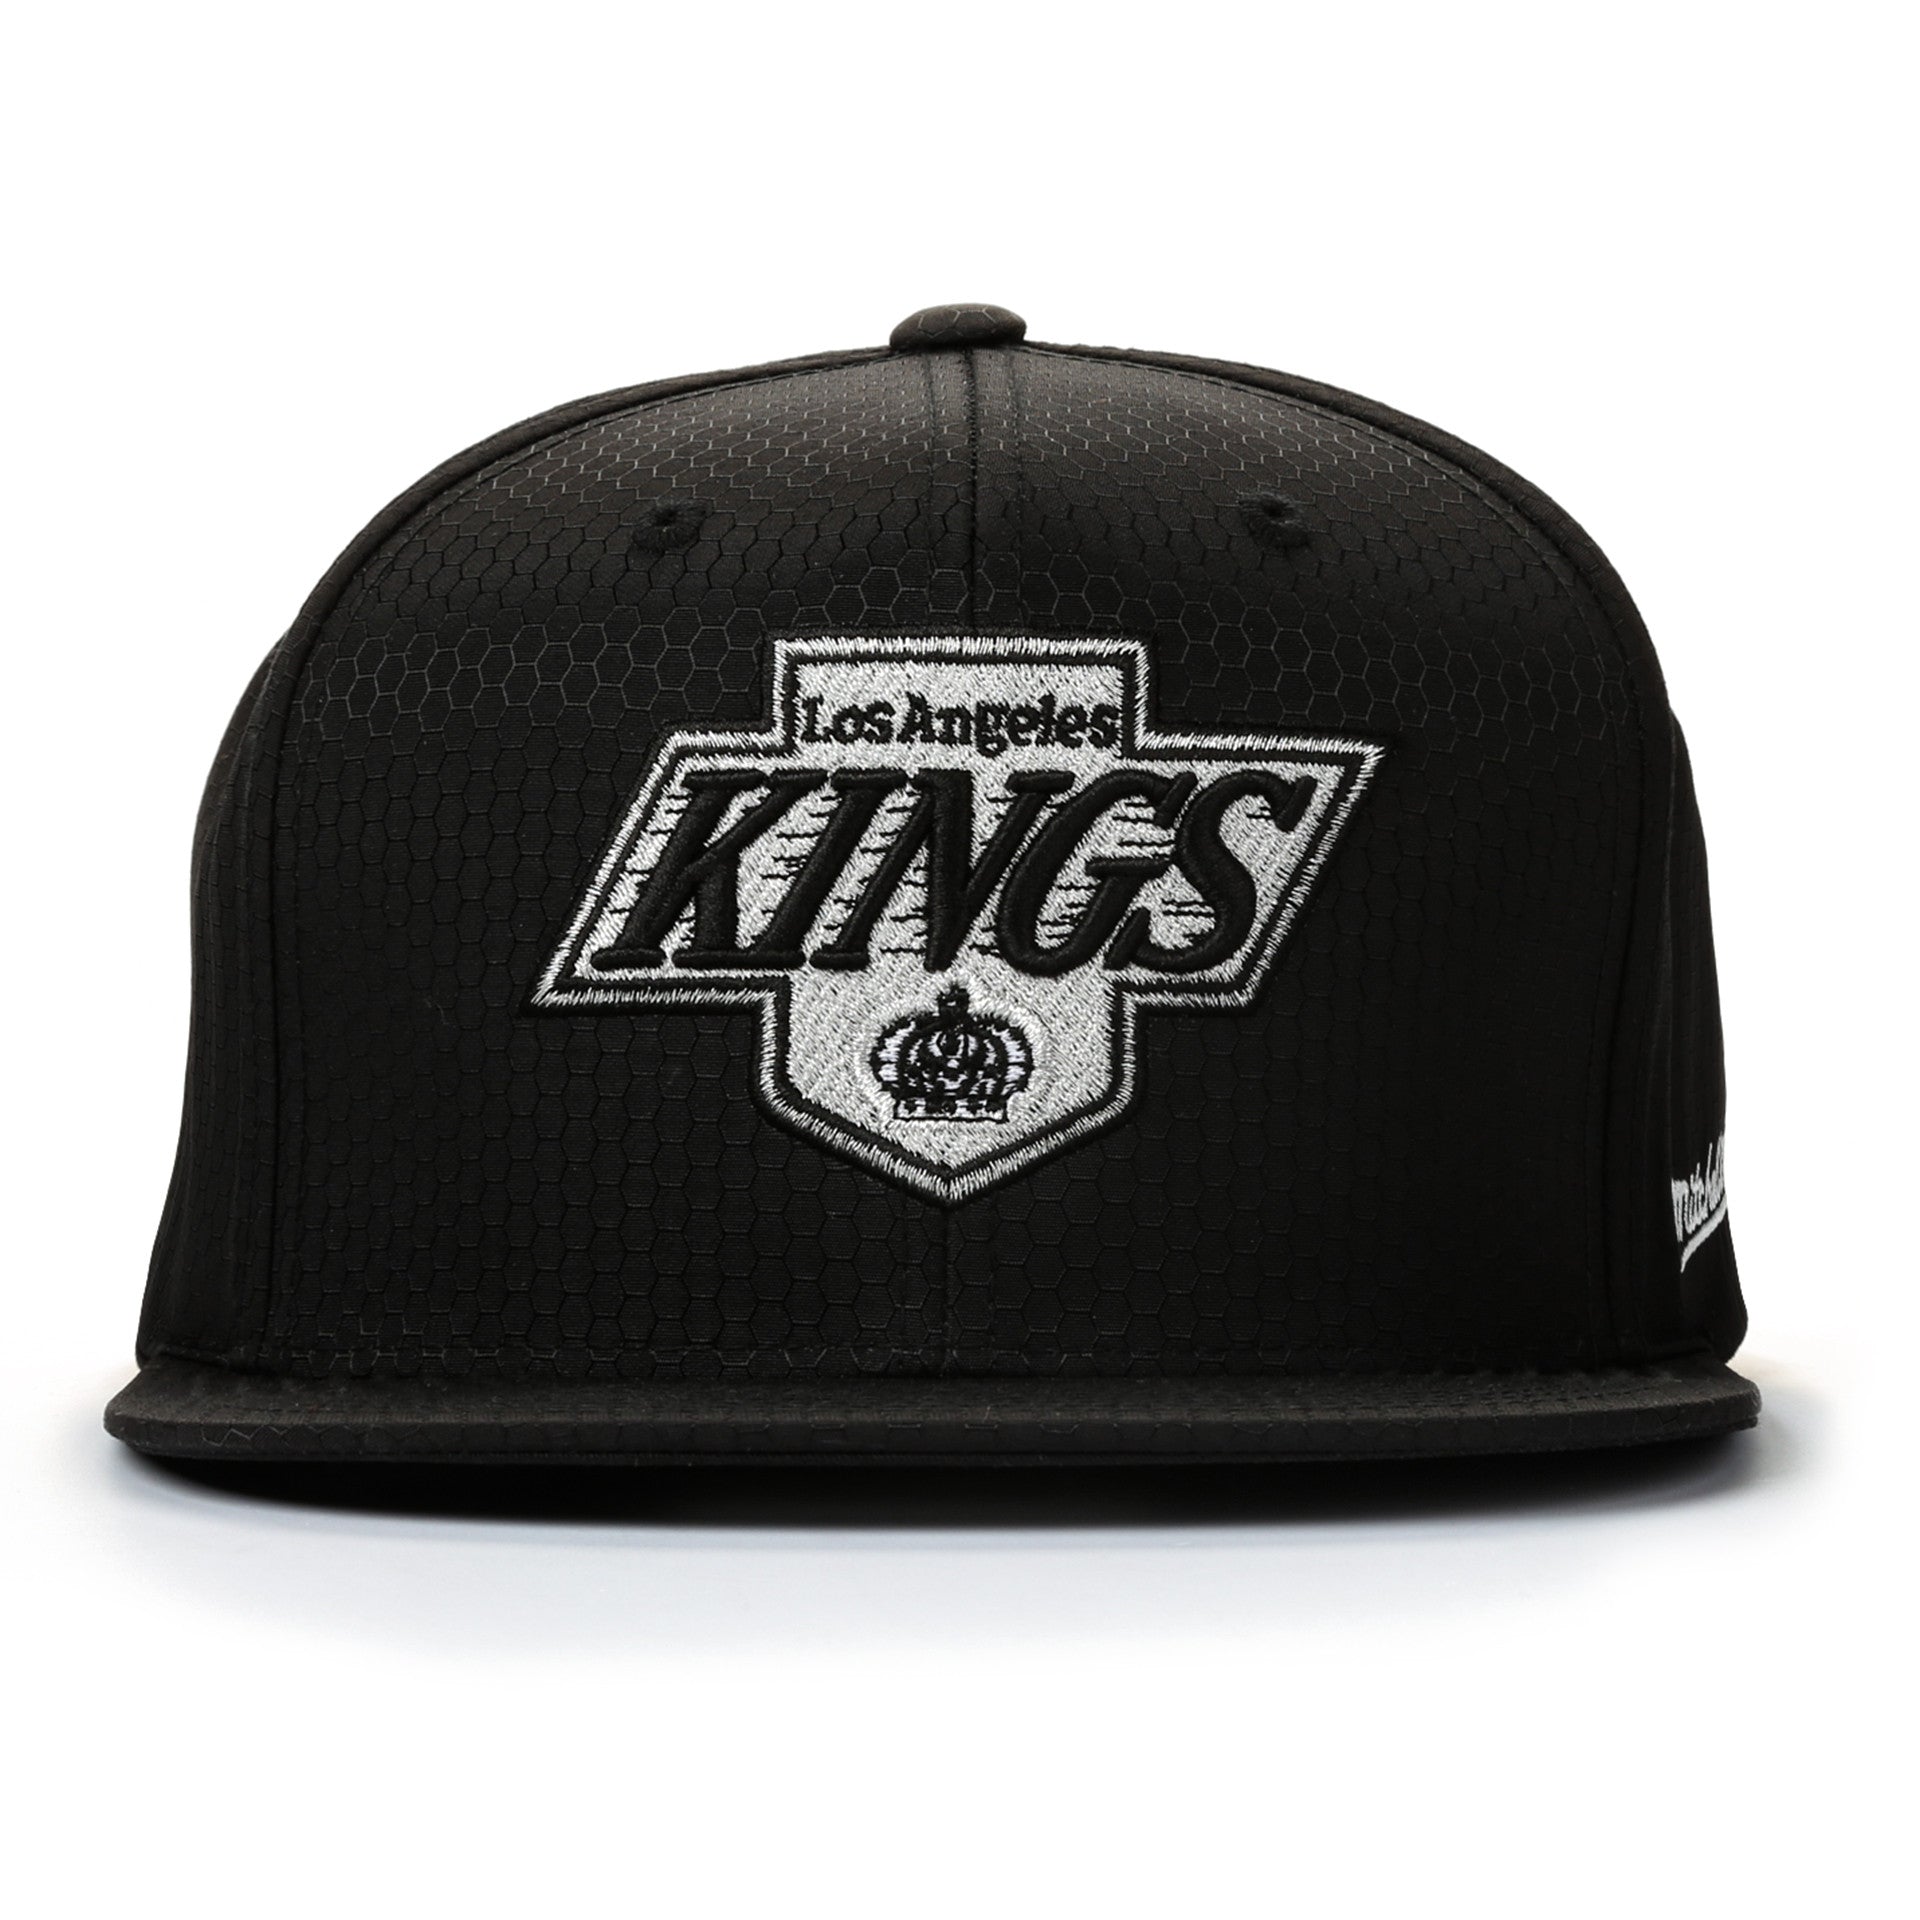  La Kings Snapback Hat